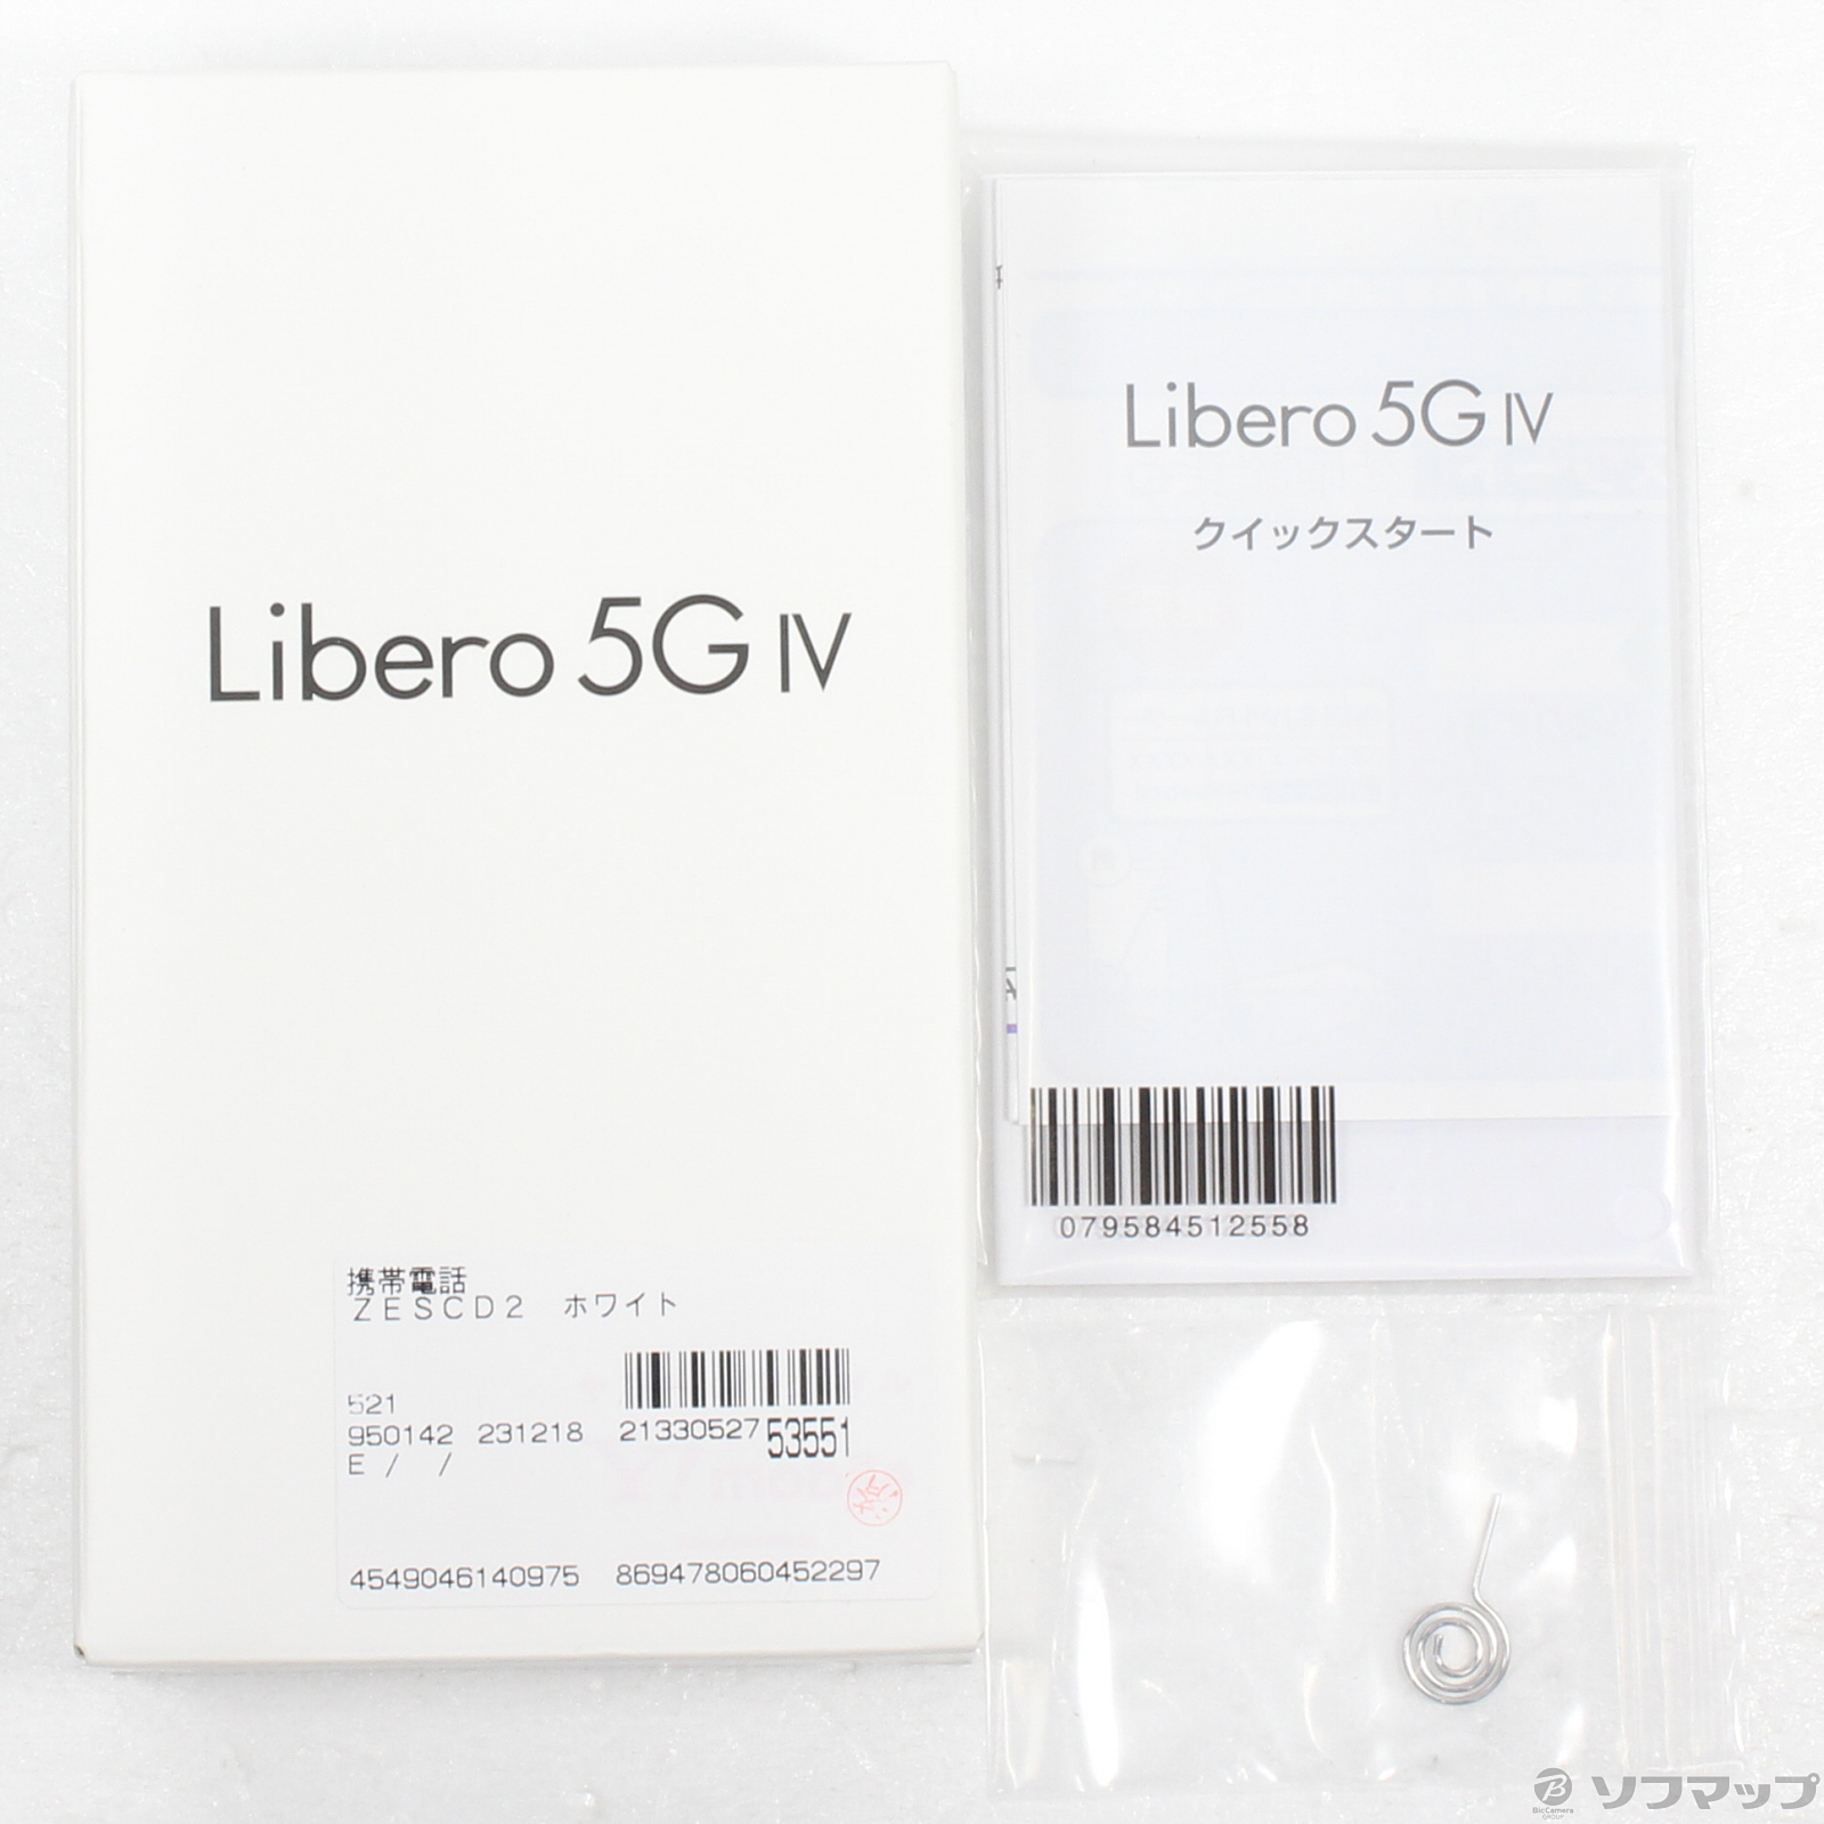 Libero 5G IV 128GB ホワイト ZESCD2 Y!mobile